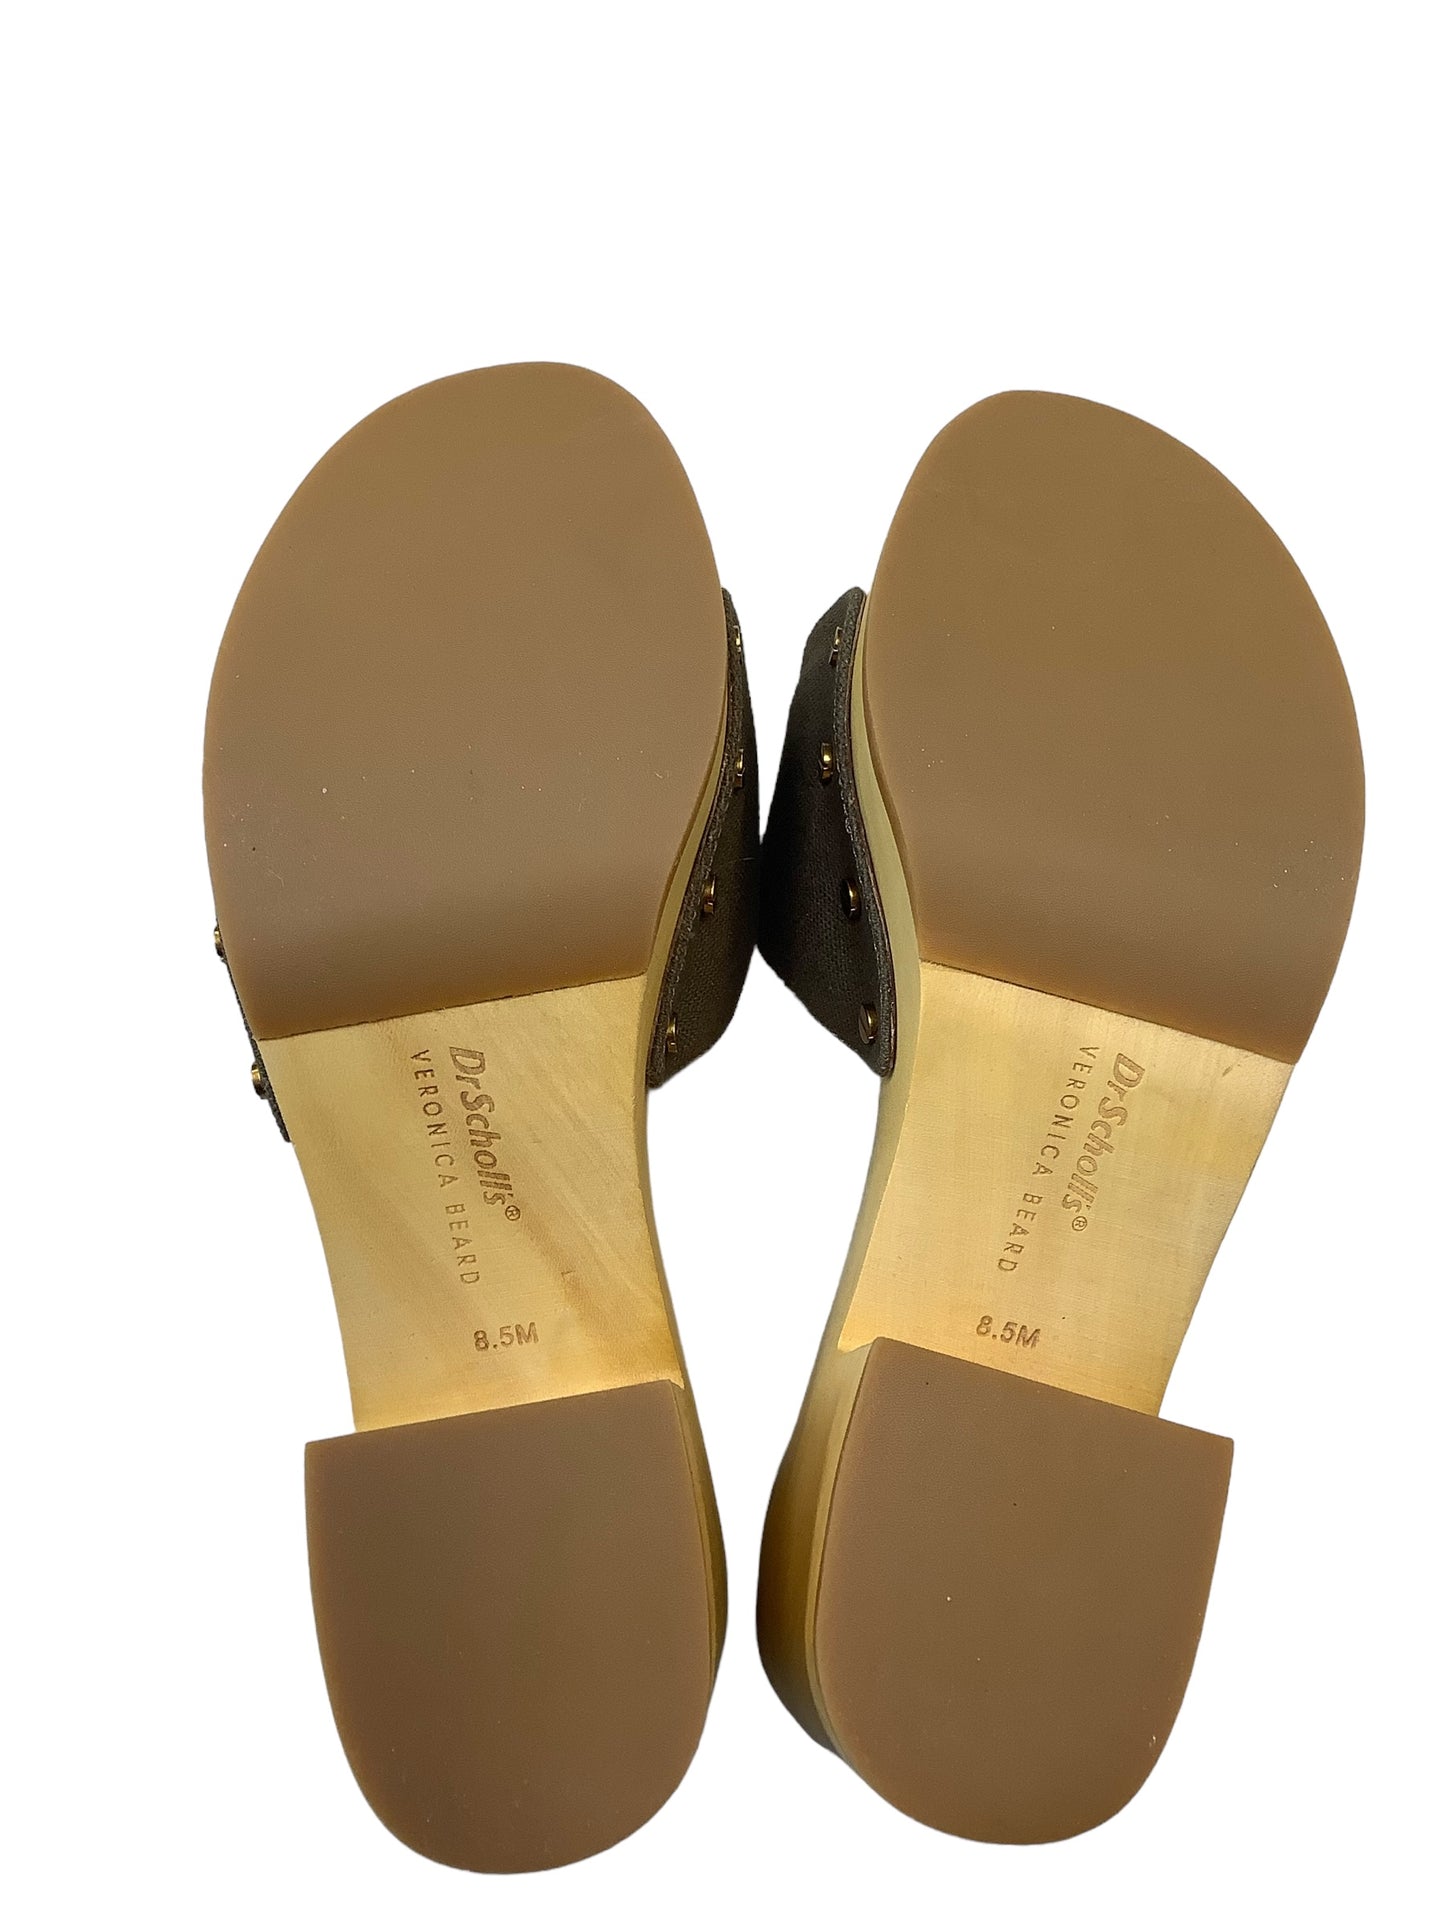 Sandals Heels Block By Veronica Beard  Size: 8.5